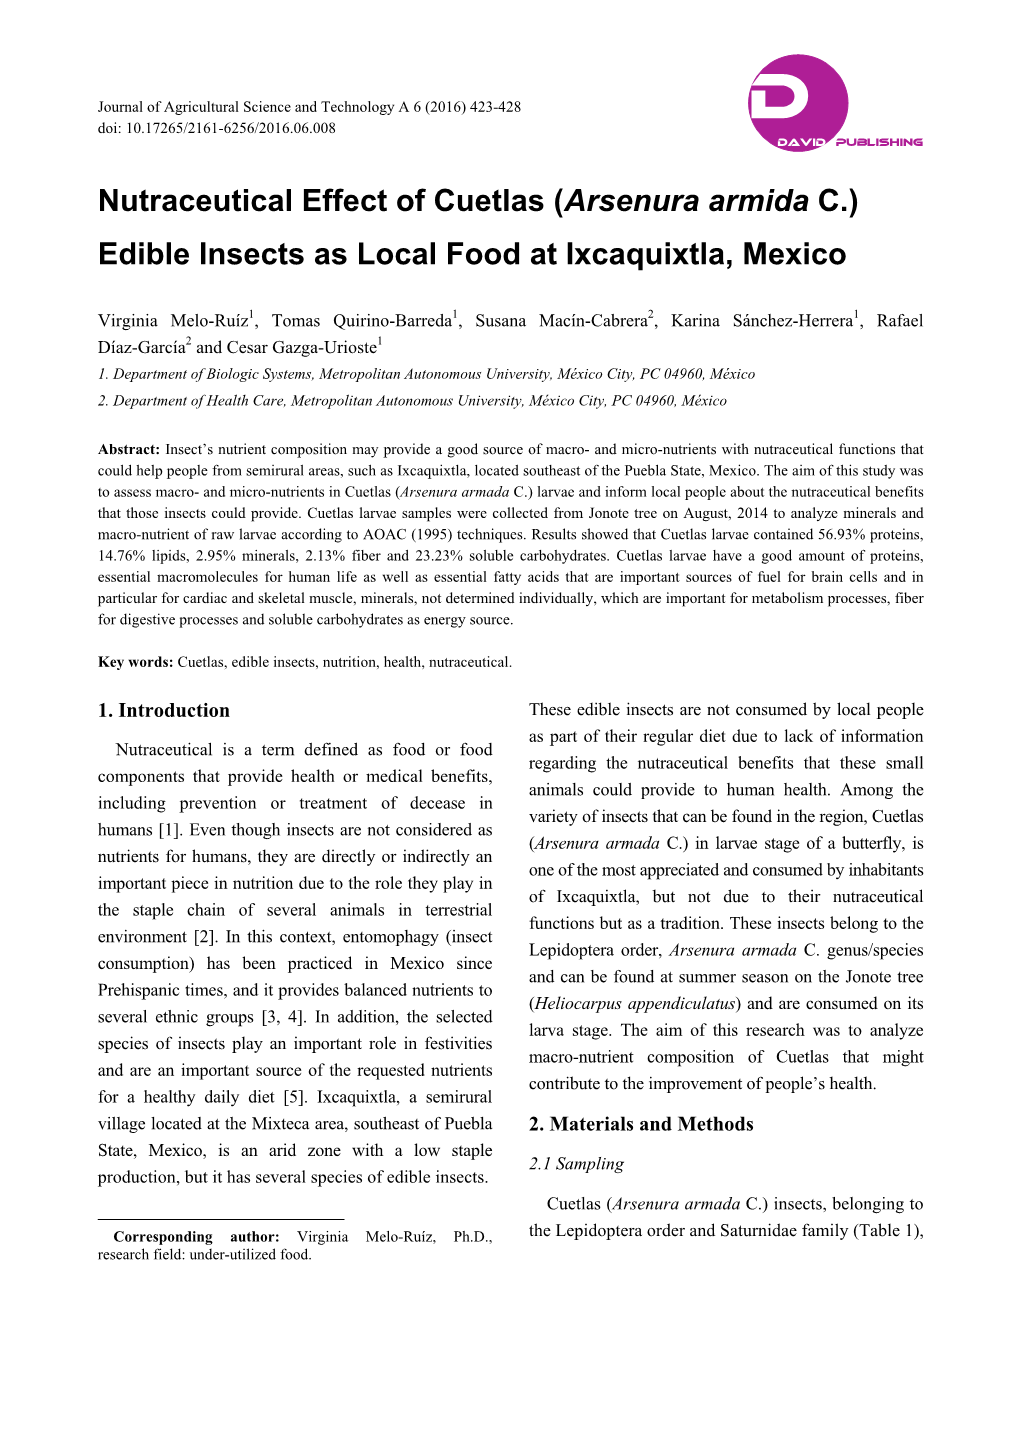 Nutraceutical Effect of Cuetlas (Arsenura Armida C.) Edible Insects As Local Food at Ixcaquixtla, Mexico